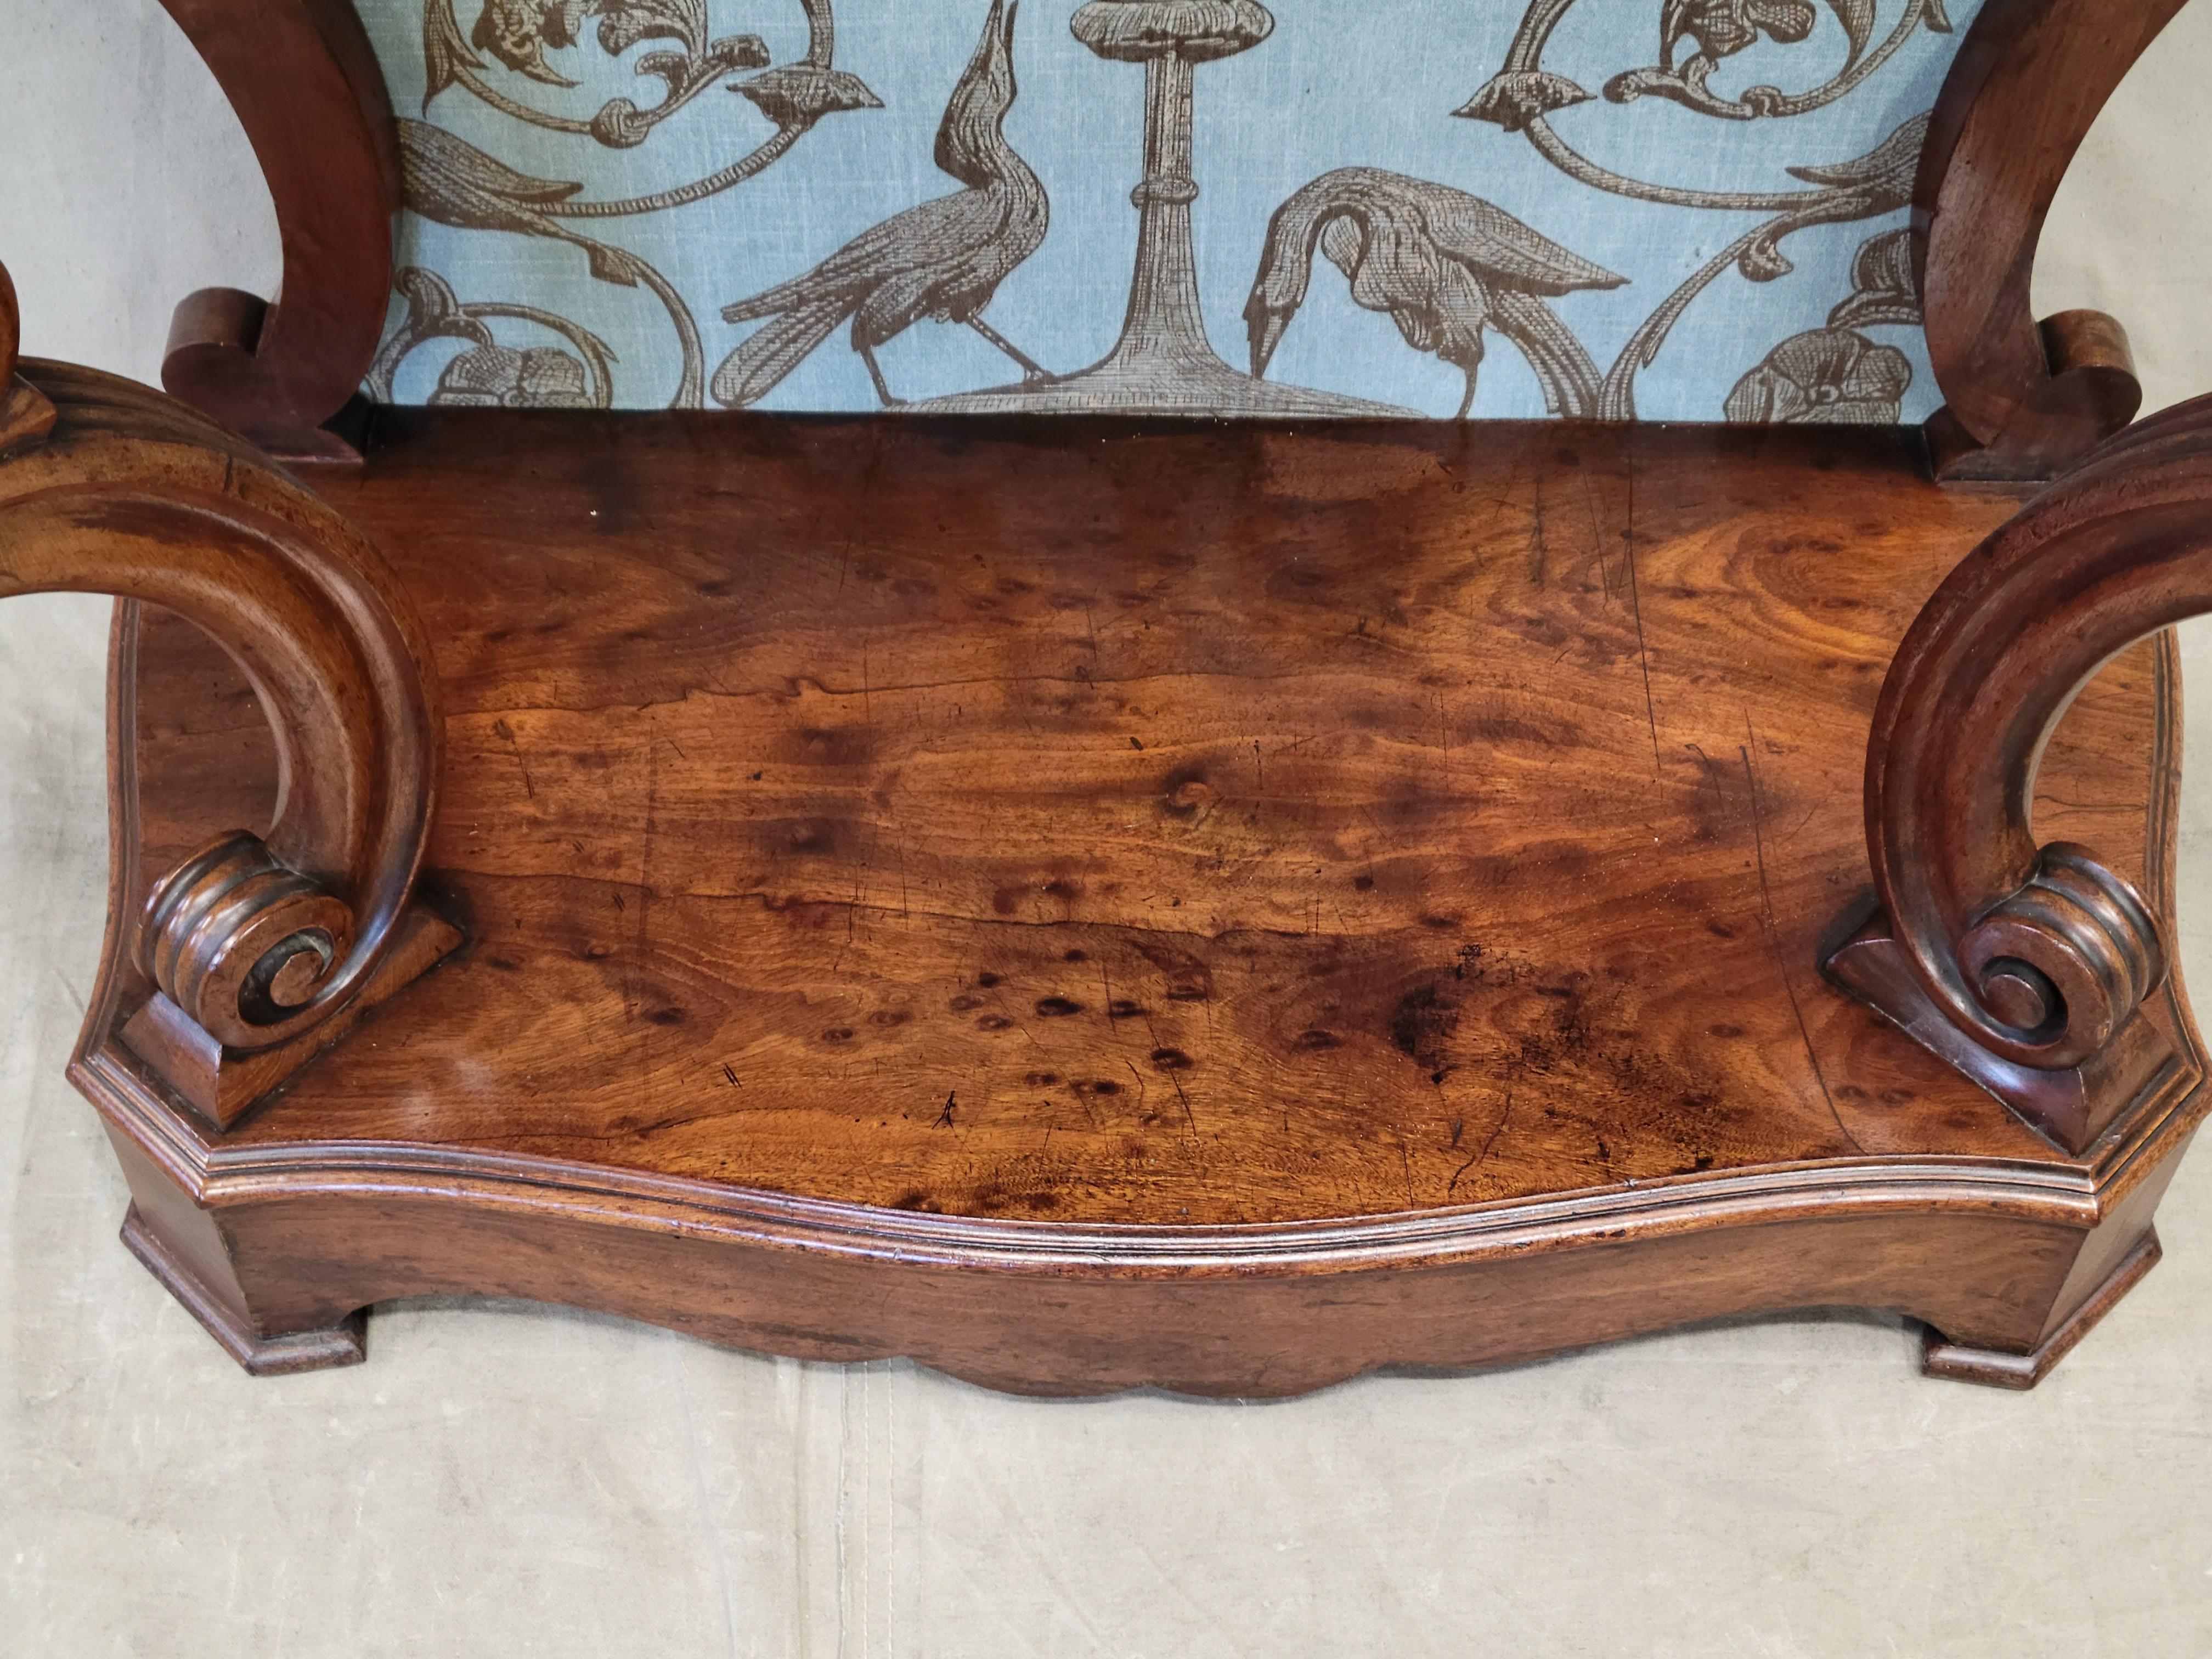 19th Century Antique Louis Phillipe Console Table with Thibaut Renaissance Fabric Panel